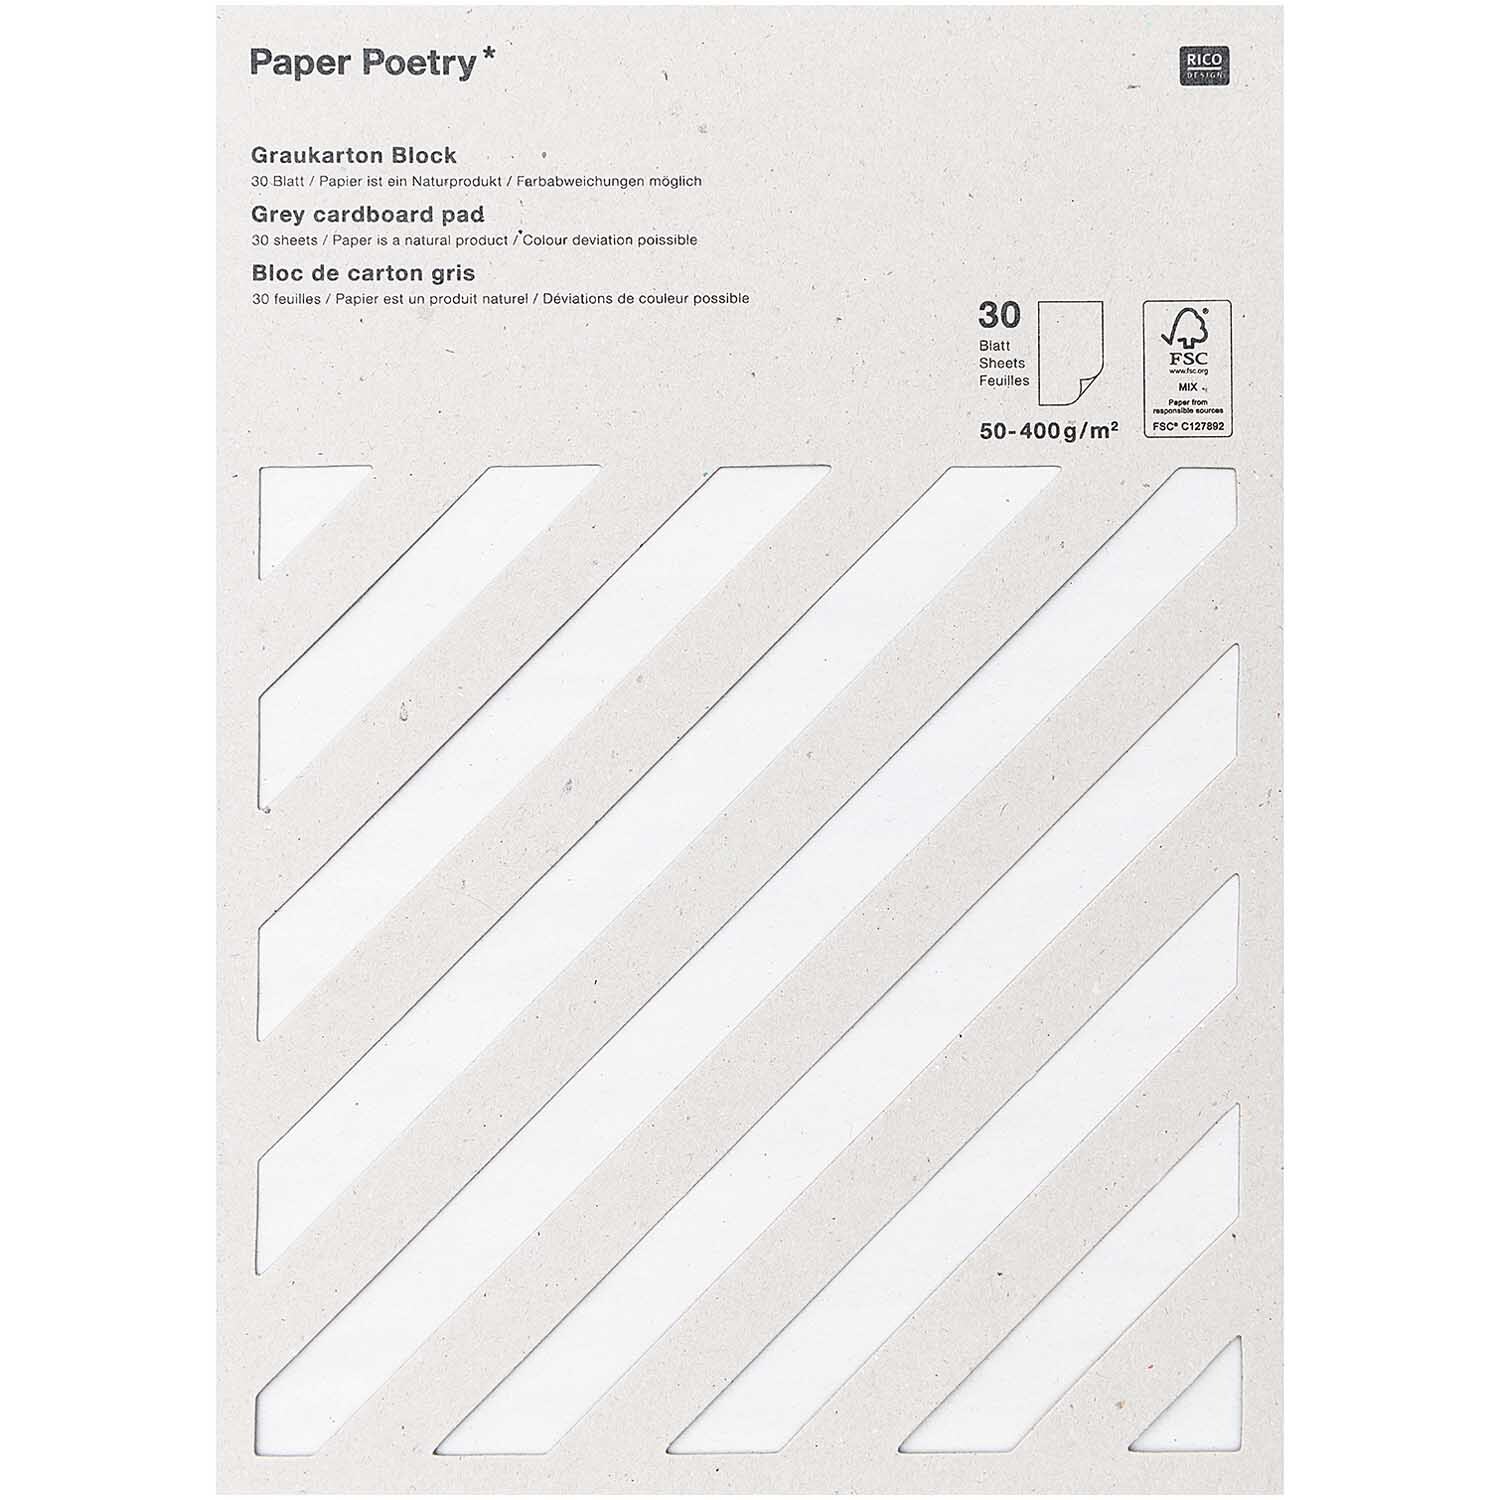 Paper Poetry Graukarton Block 30 Blatt 50-400g/m²